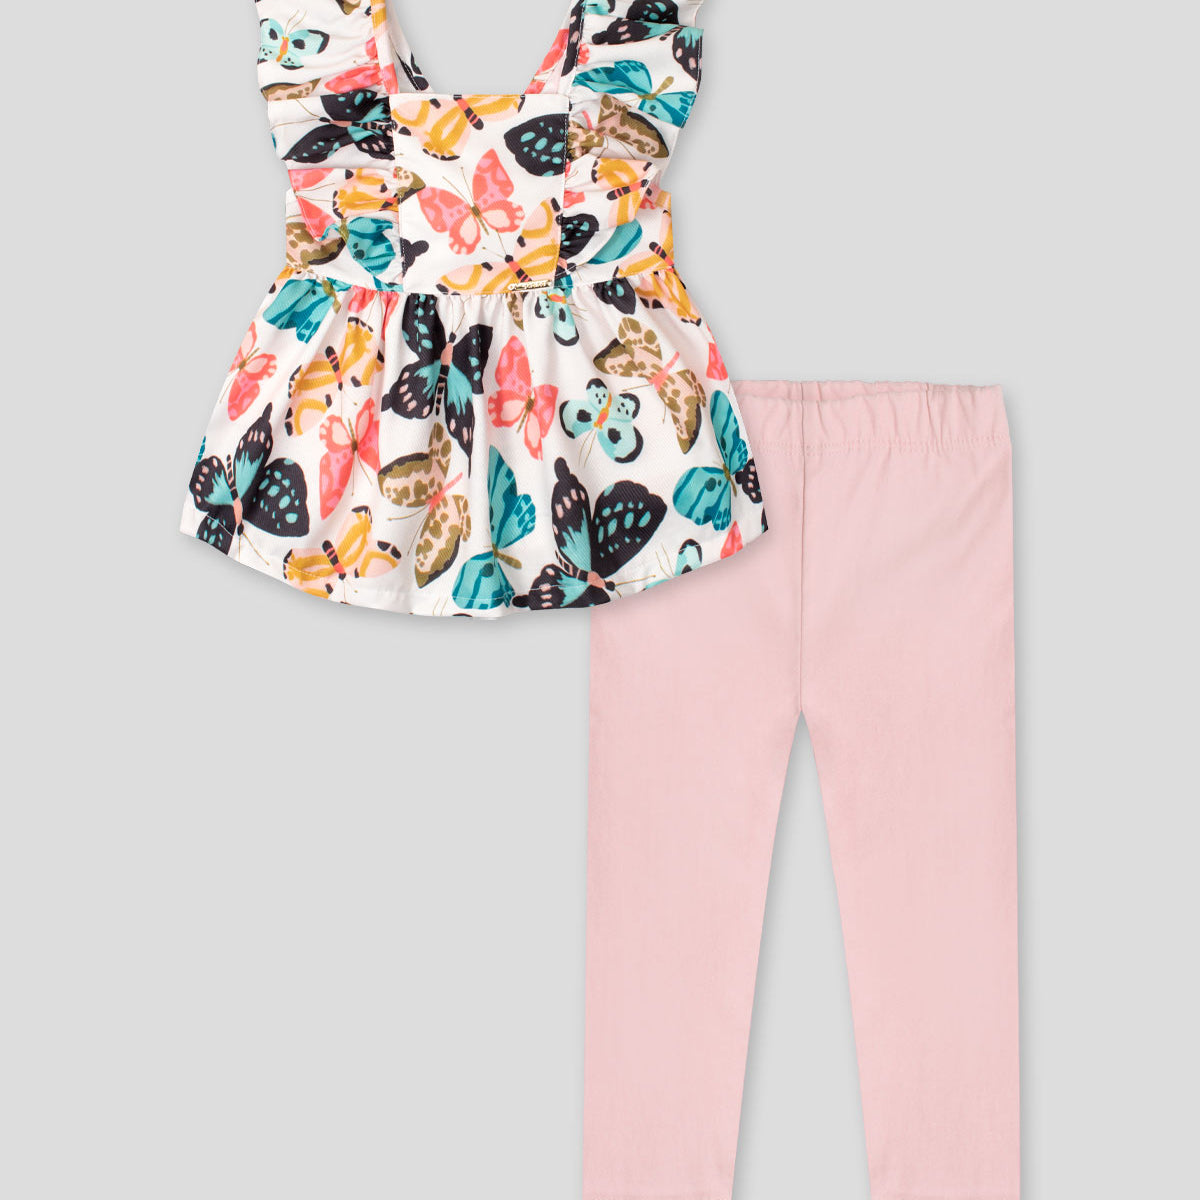 Conjunto blusa estampada de mariposas con bolero en manga, detalle de moño y leggins rosado para niña